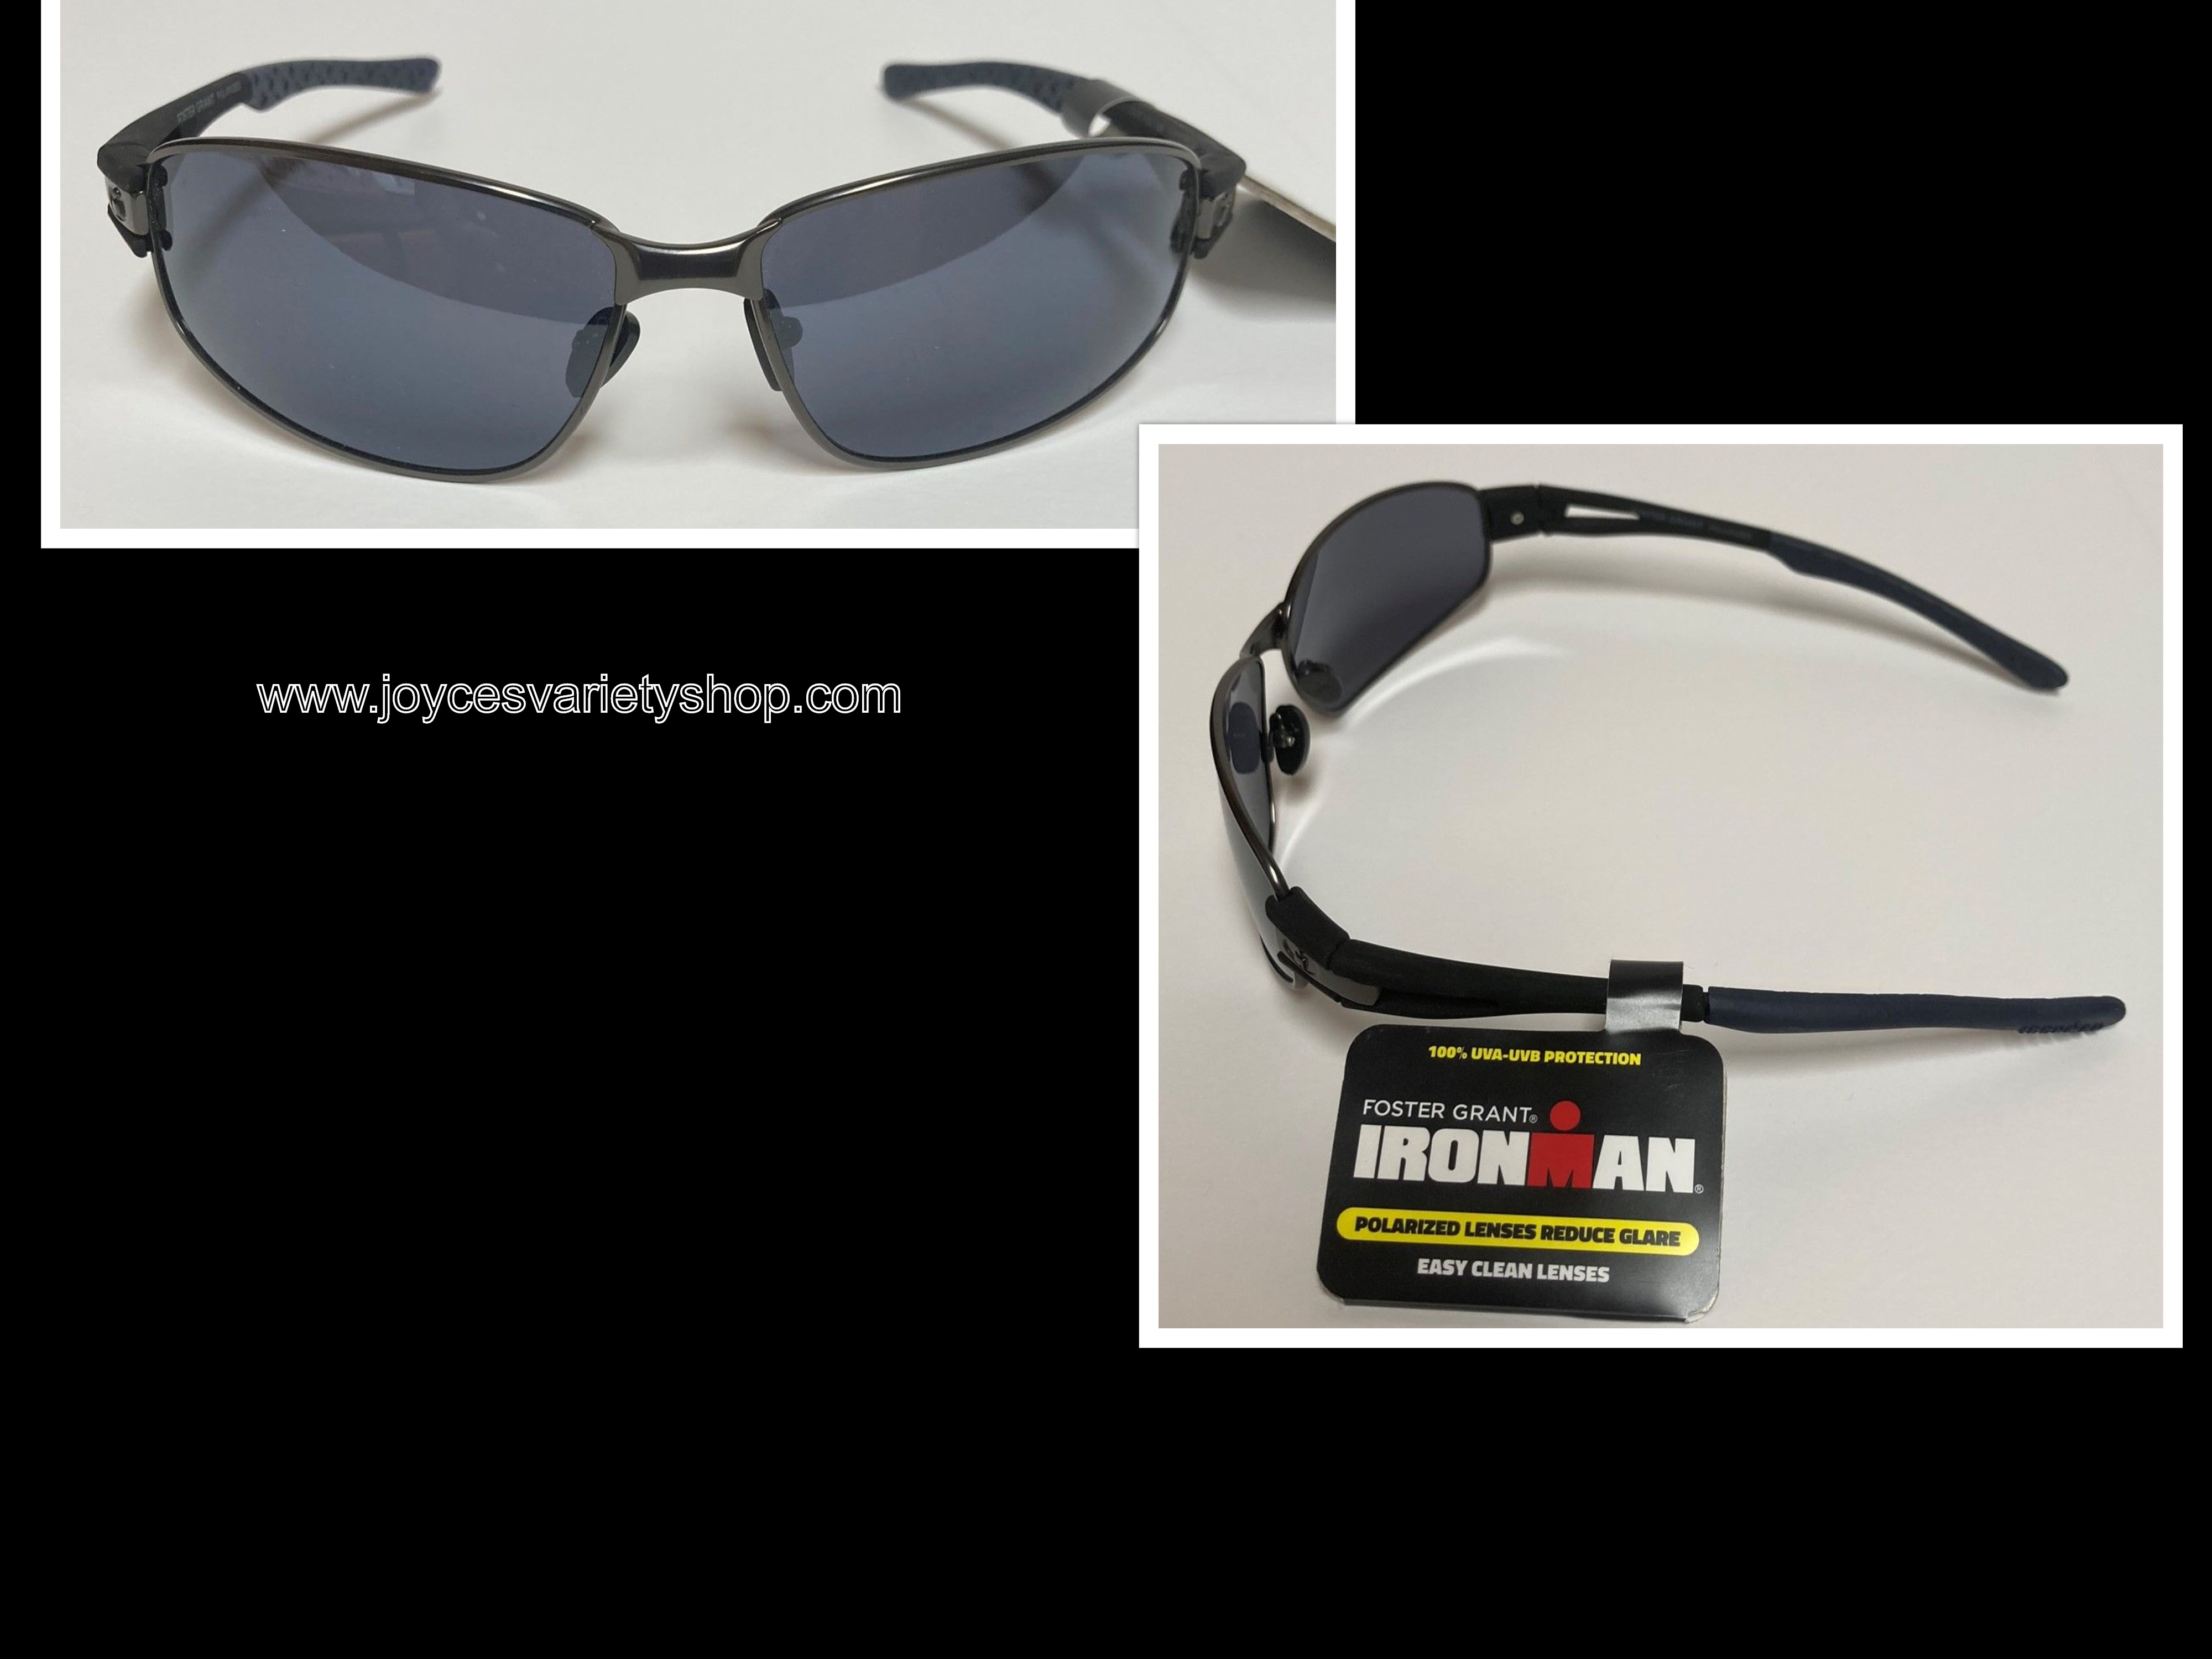 Foster Grant Polarized Ironman Sunglasses Black Metal 100% UVA UVB Protection